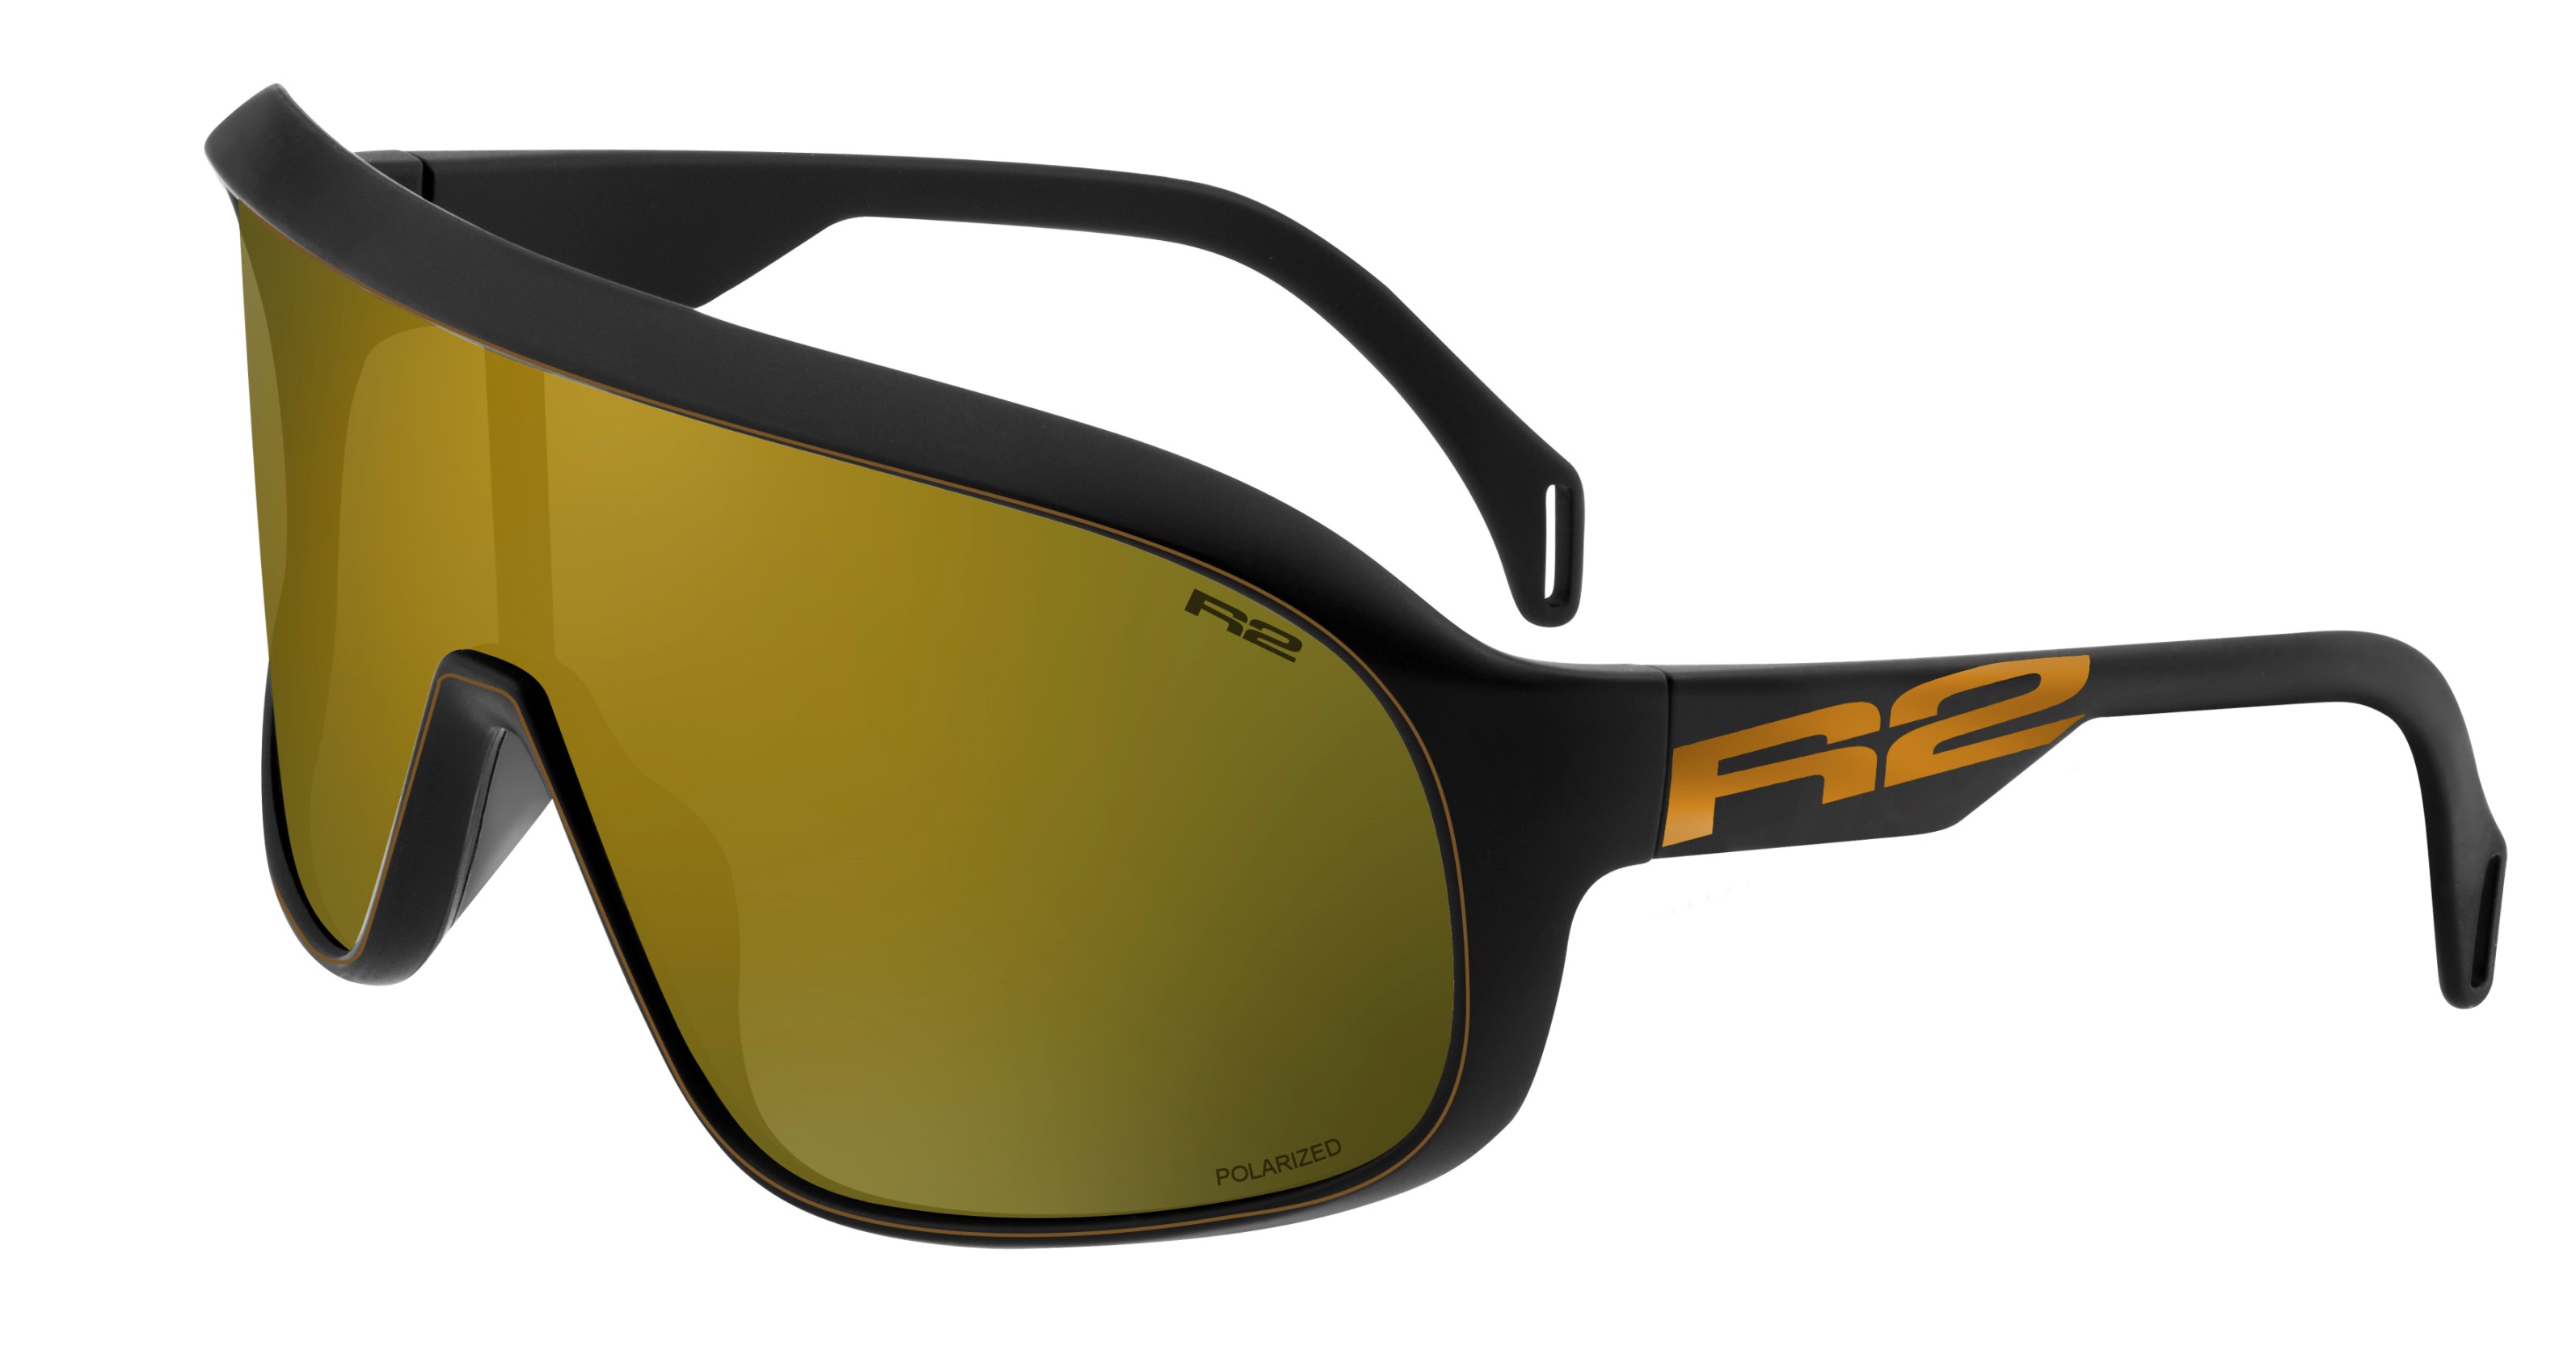 Sport sunglasses R2 FALCON AT105D standard